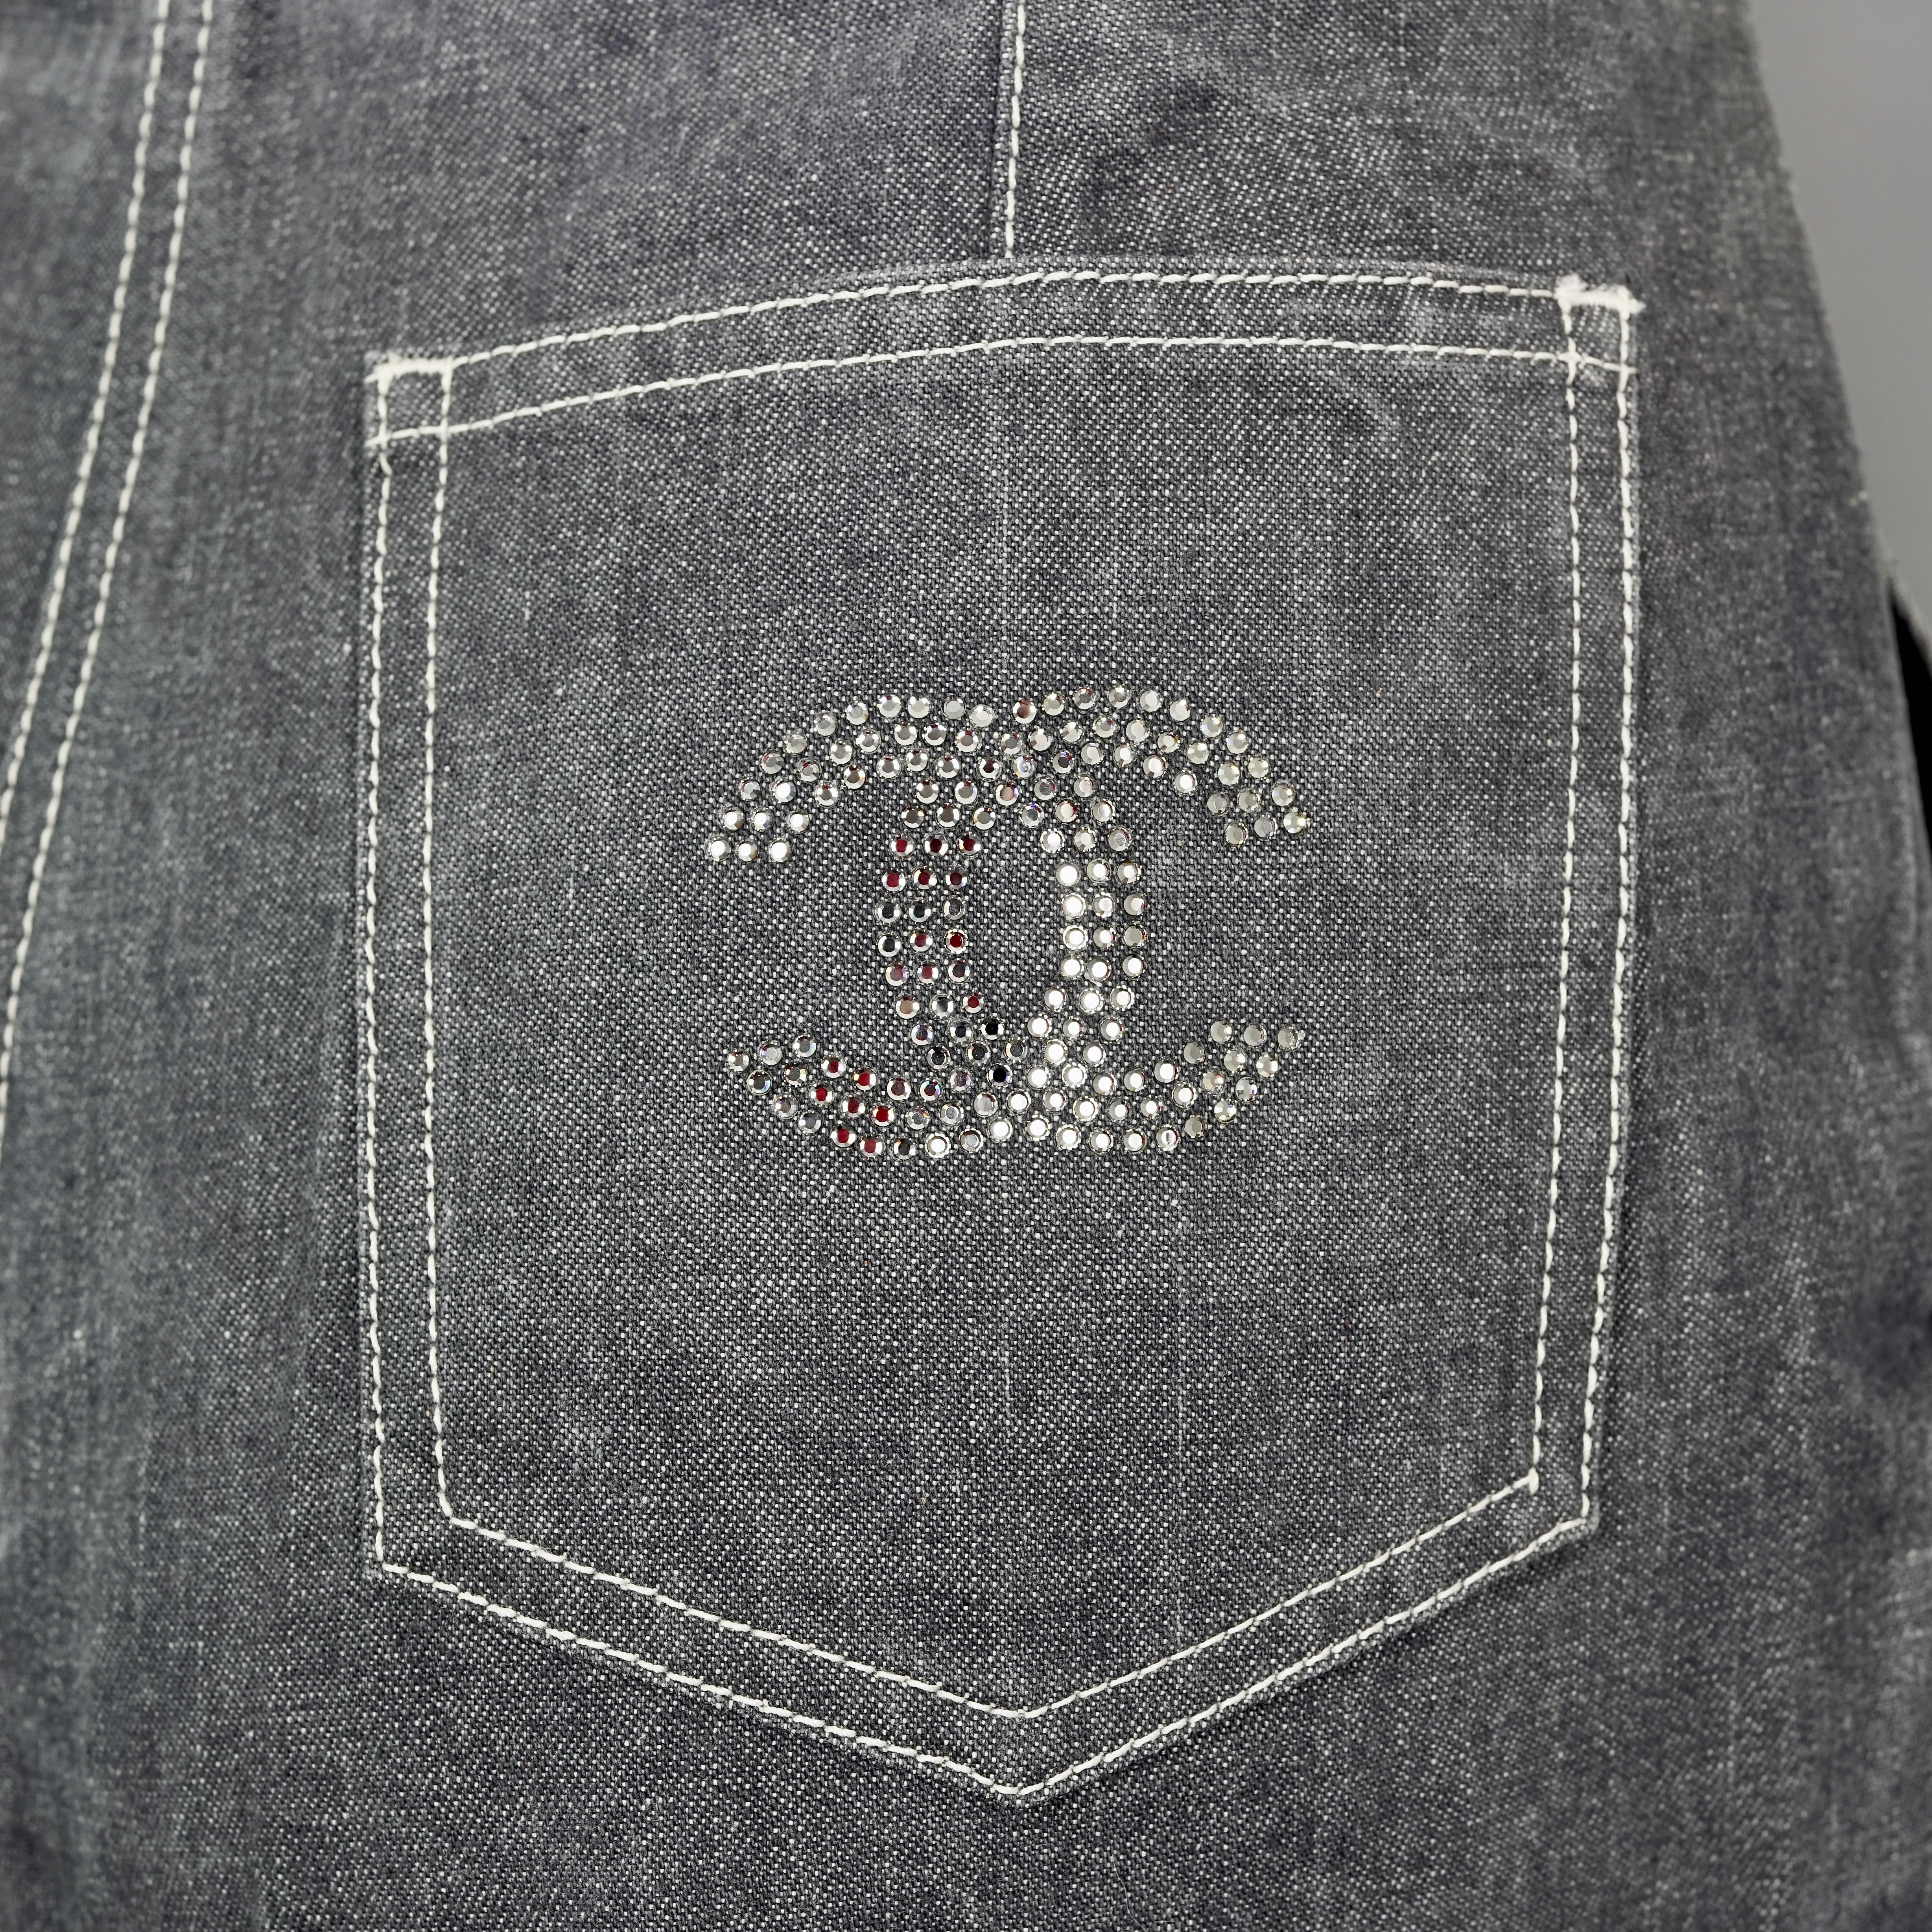 Vintage 2001 CHANEL Crystal CC Logo Flared Cargo Denim Pants

Measurements taken laid flat, please double waist, hips and hem:
Waist: 14.96 inches (38 cm)
Hips: 19.68 inches (50 cm)
Length: 46.06 inches (117 cm)
Flared Hem Width: 14.17 inches (36